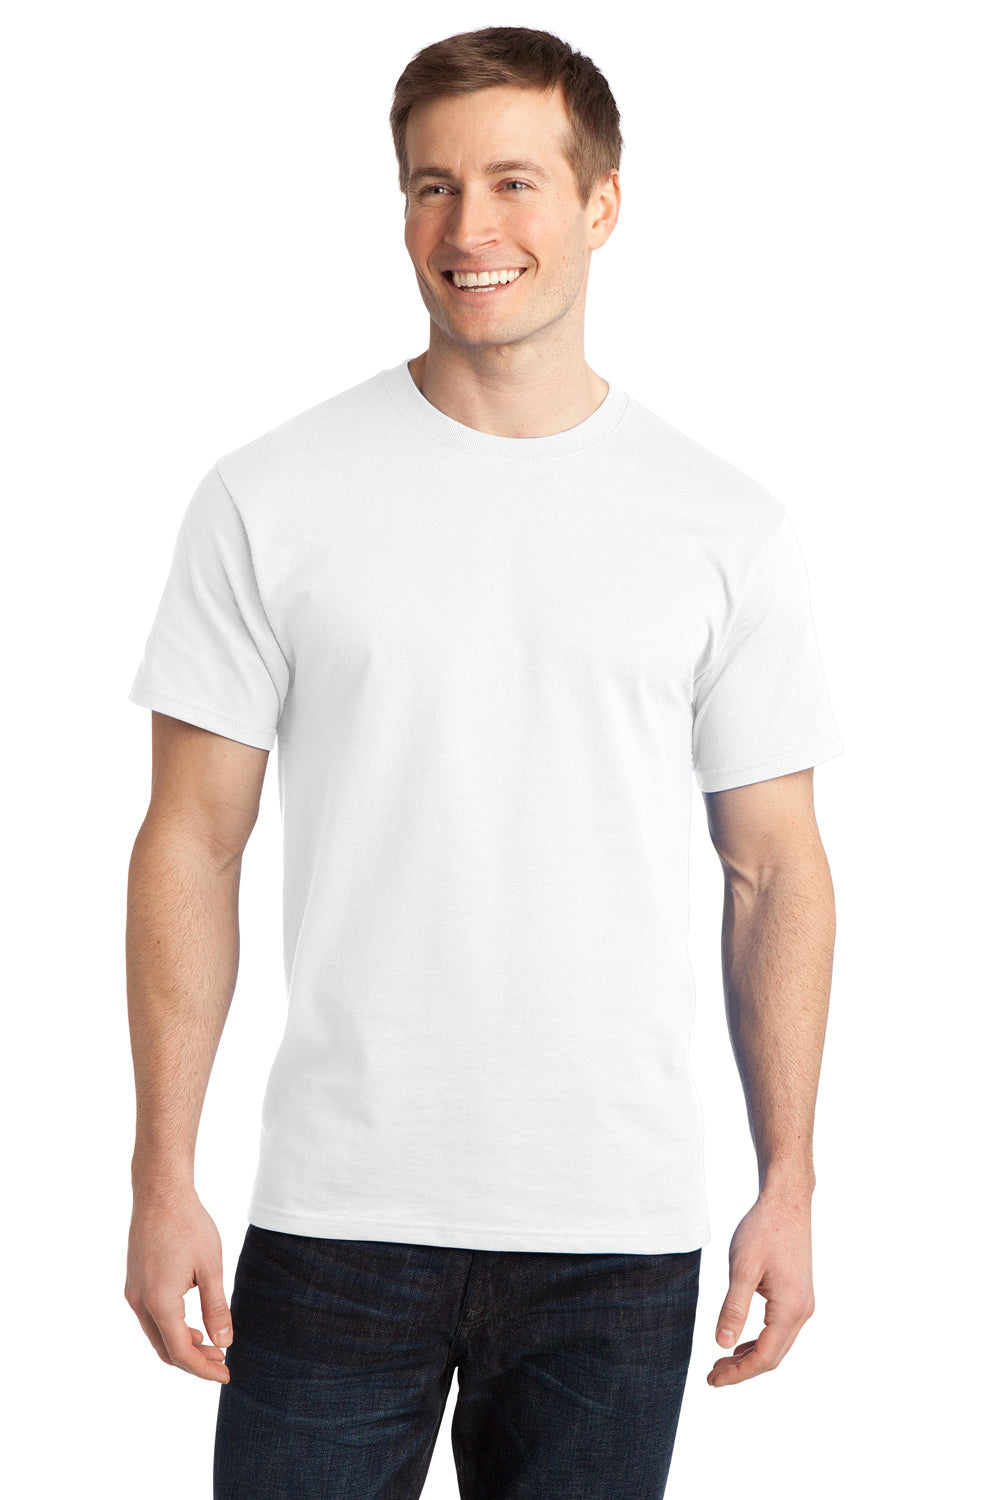 Port & Company PC150 Mens Short Sleeve Crewneck T-Shirt White Front